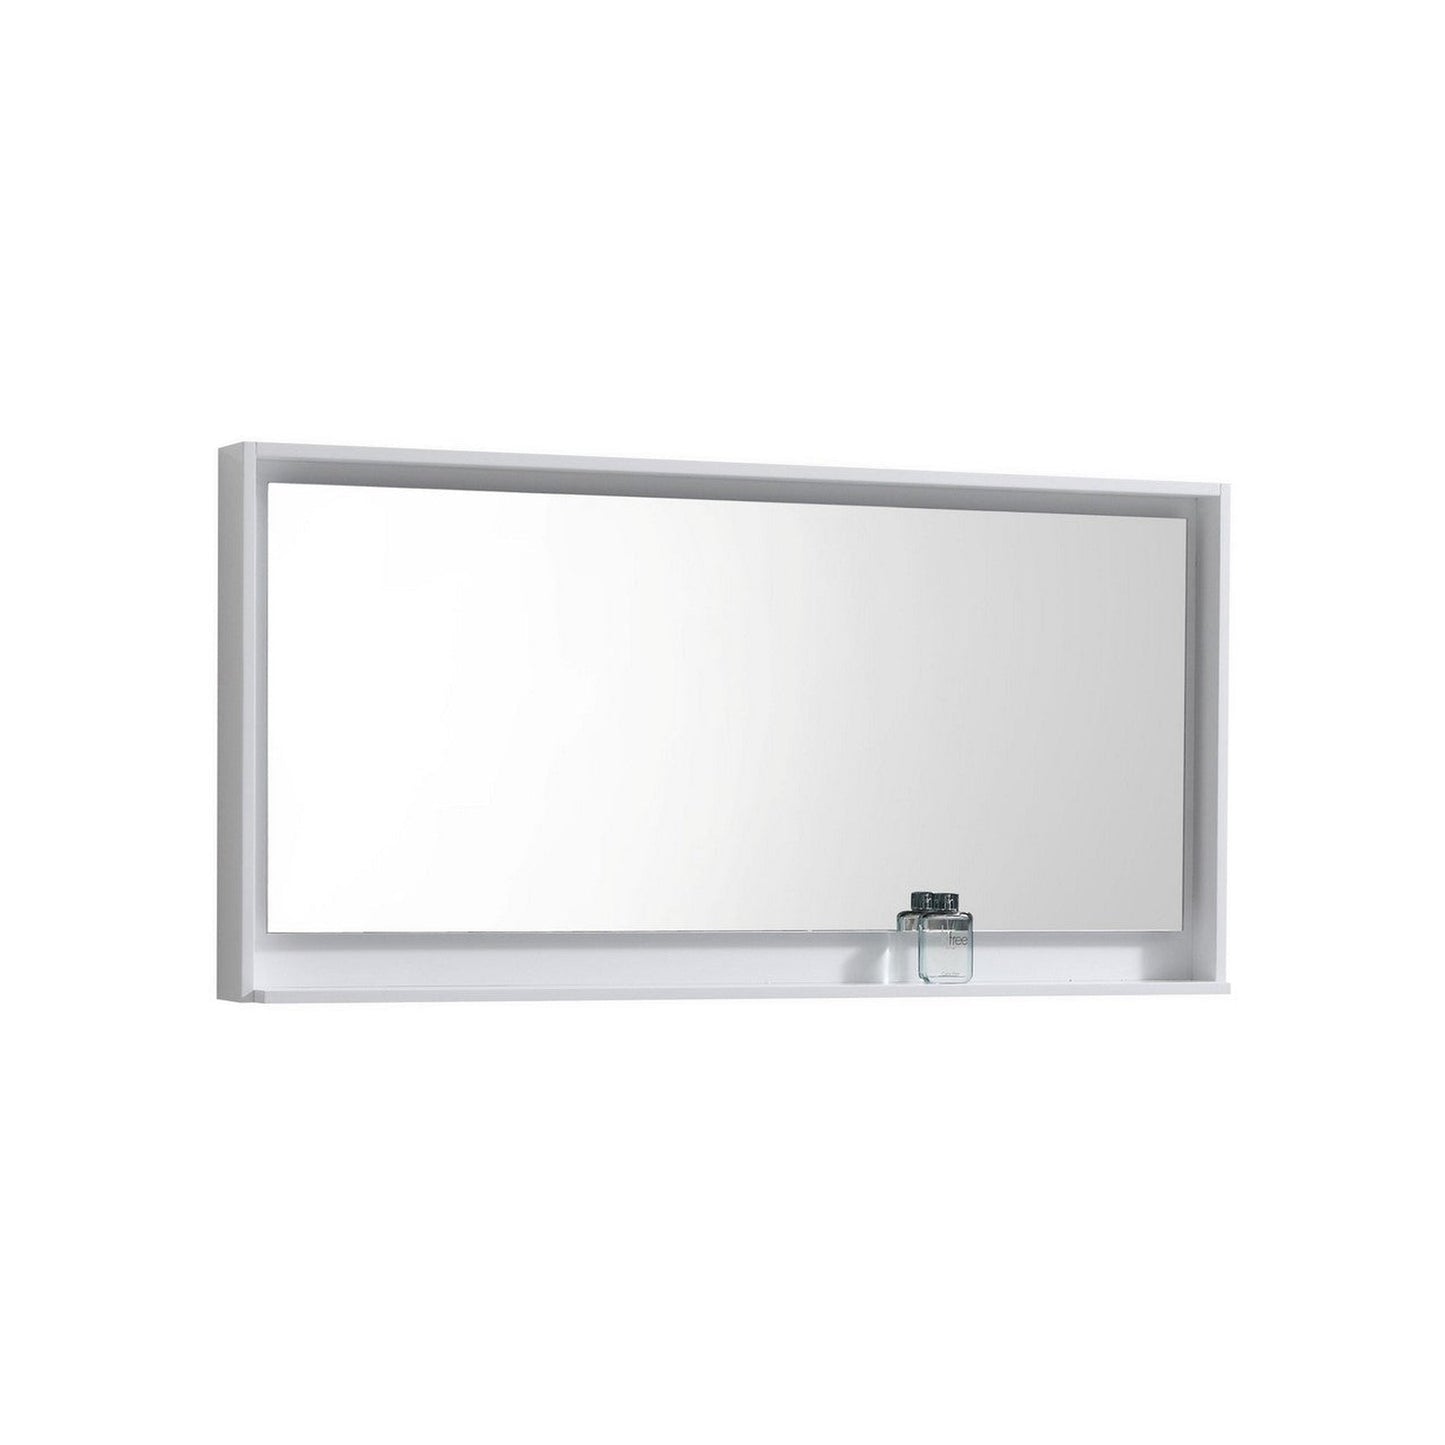 KubeBath Bosco 60" High Gloss White Modern Freestanding Bathroom Vanity With Single Undermount Sink With Overflow and 60" White Framed Mirror